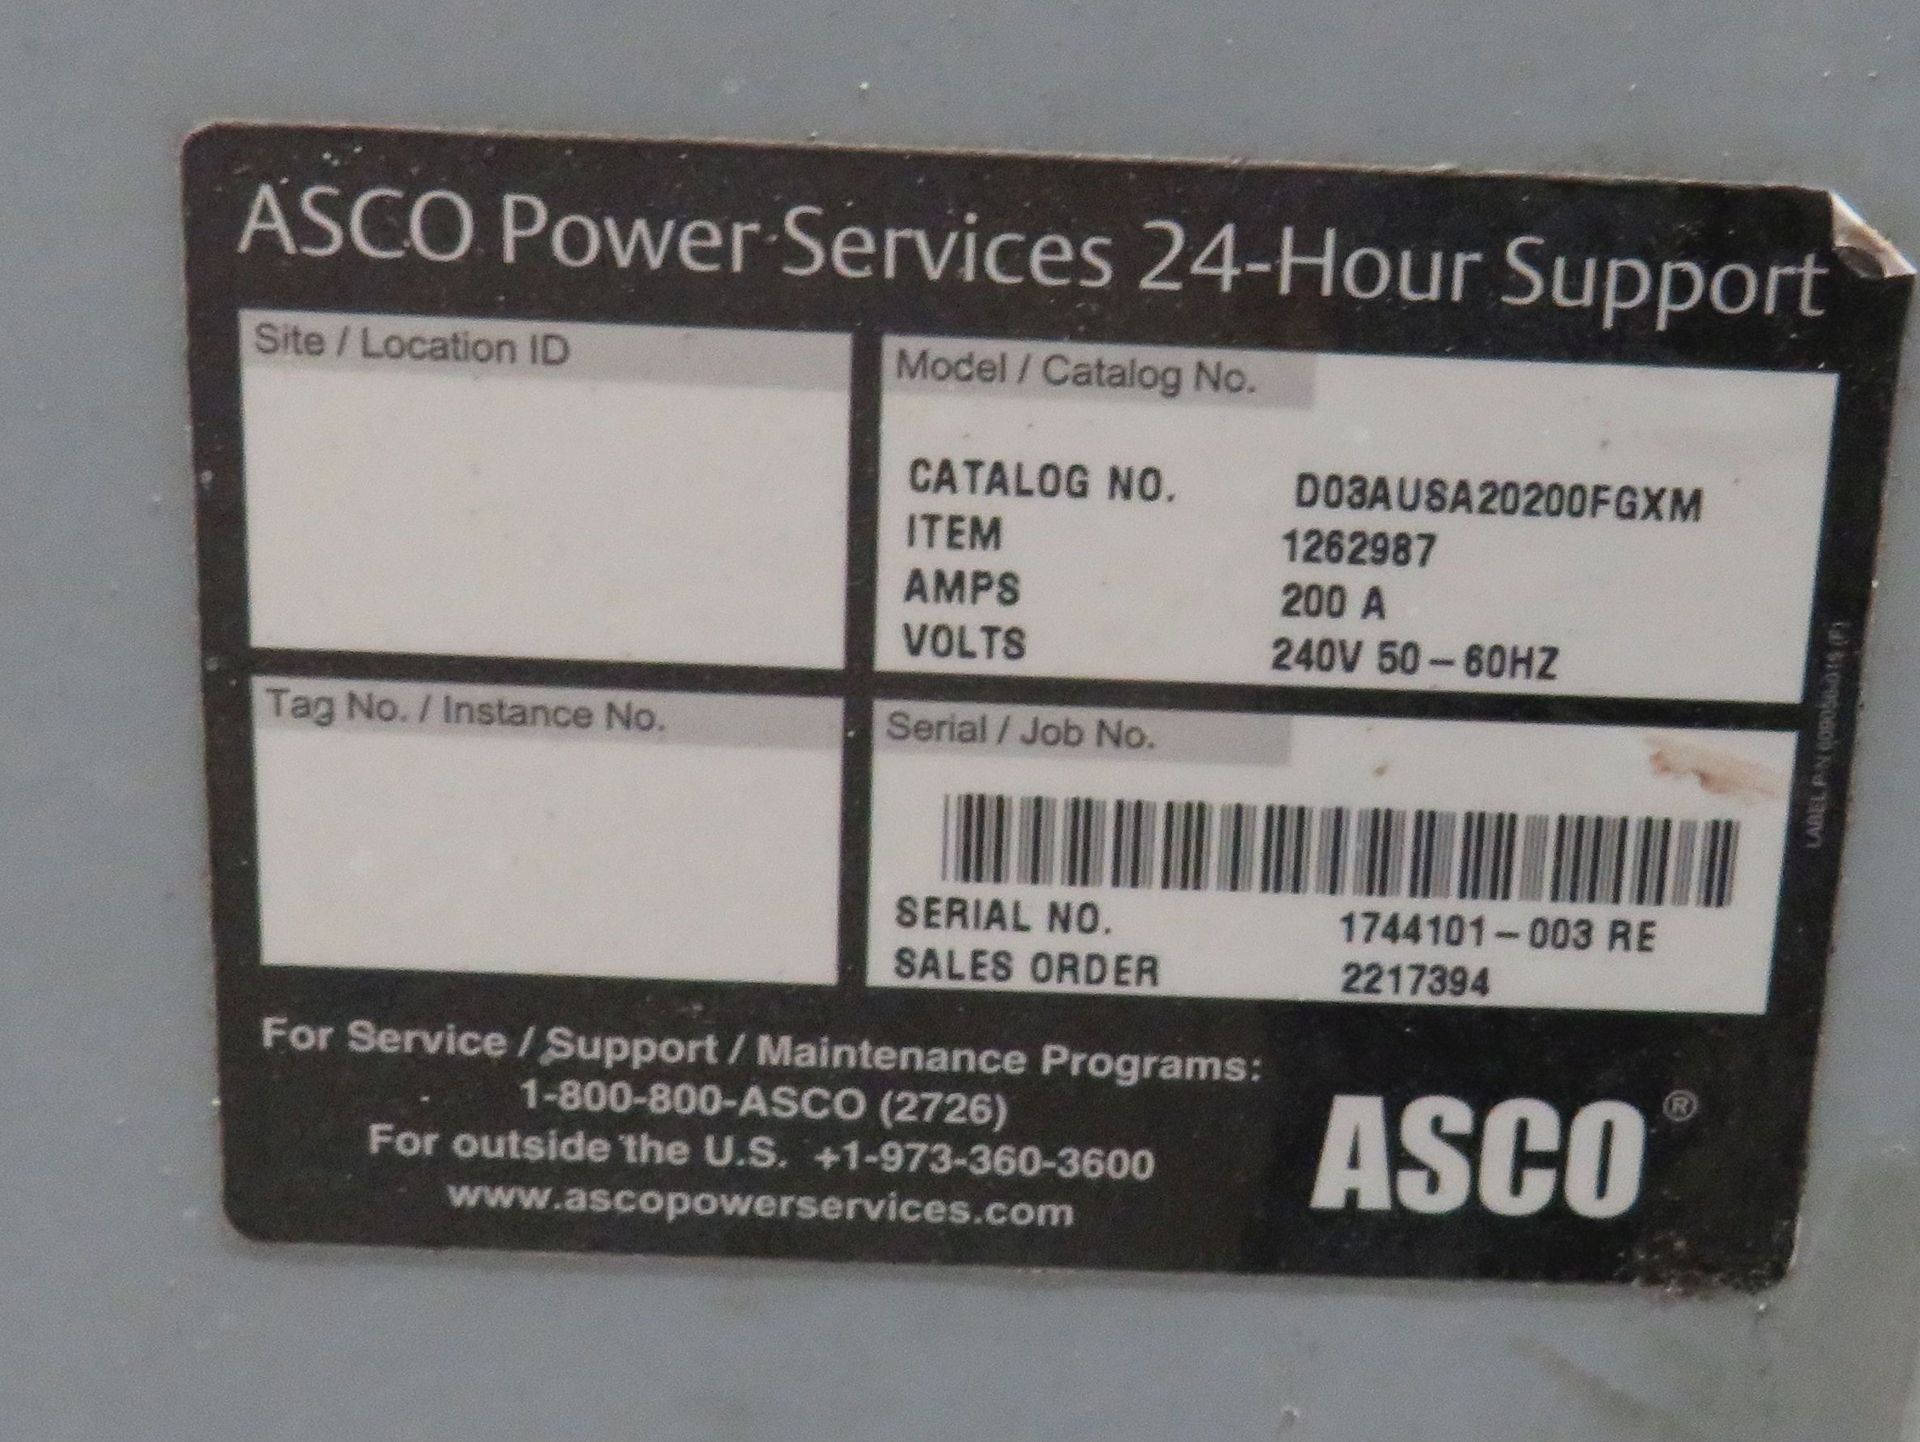 Asgo 200 amp control panel for generator - Image 2 of 9